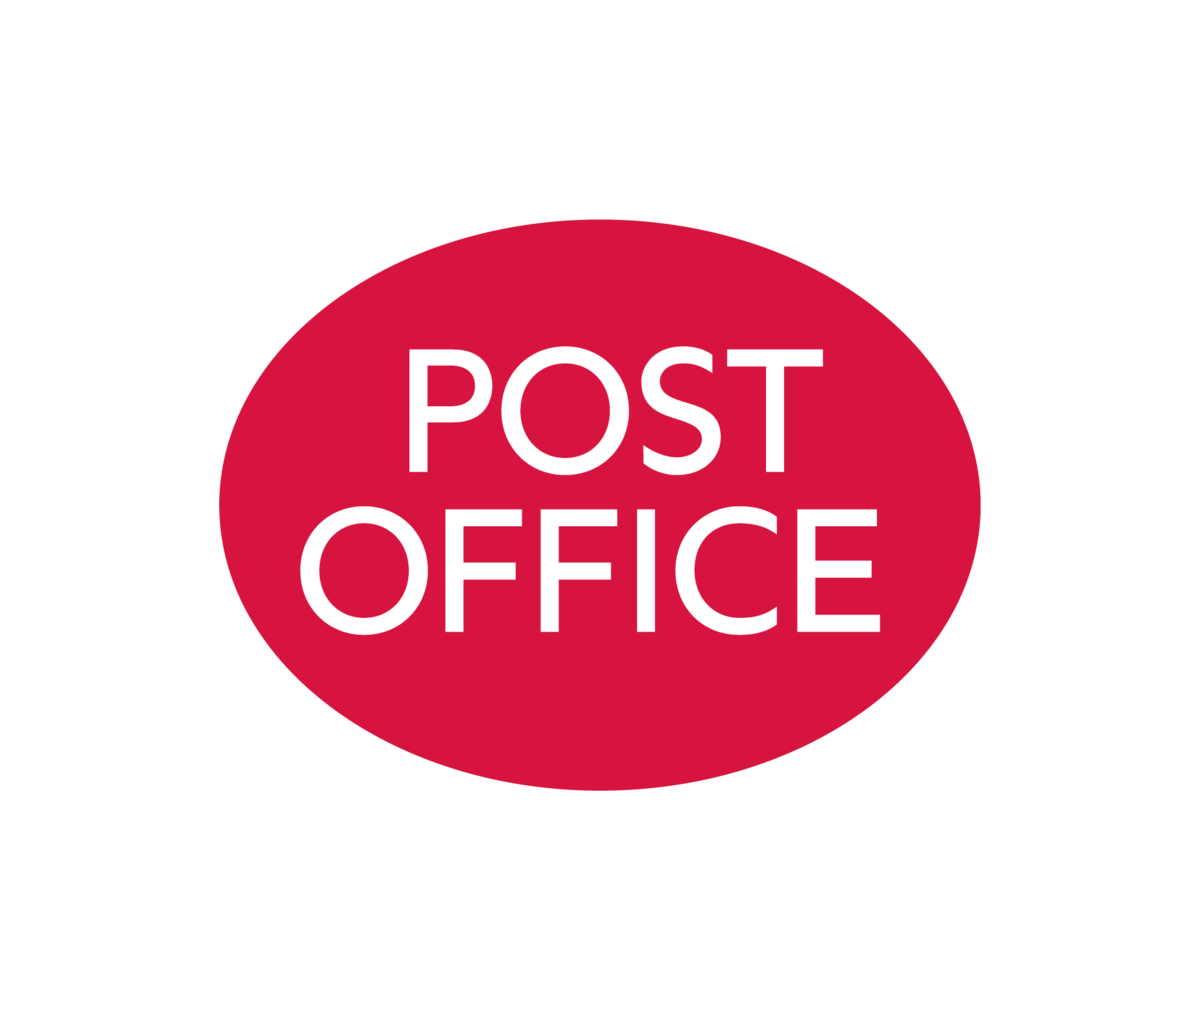 Post Office logo